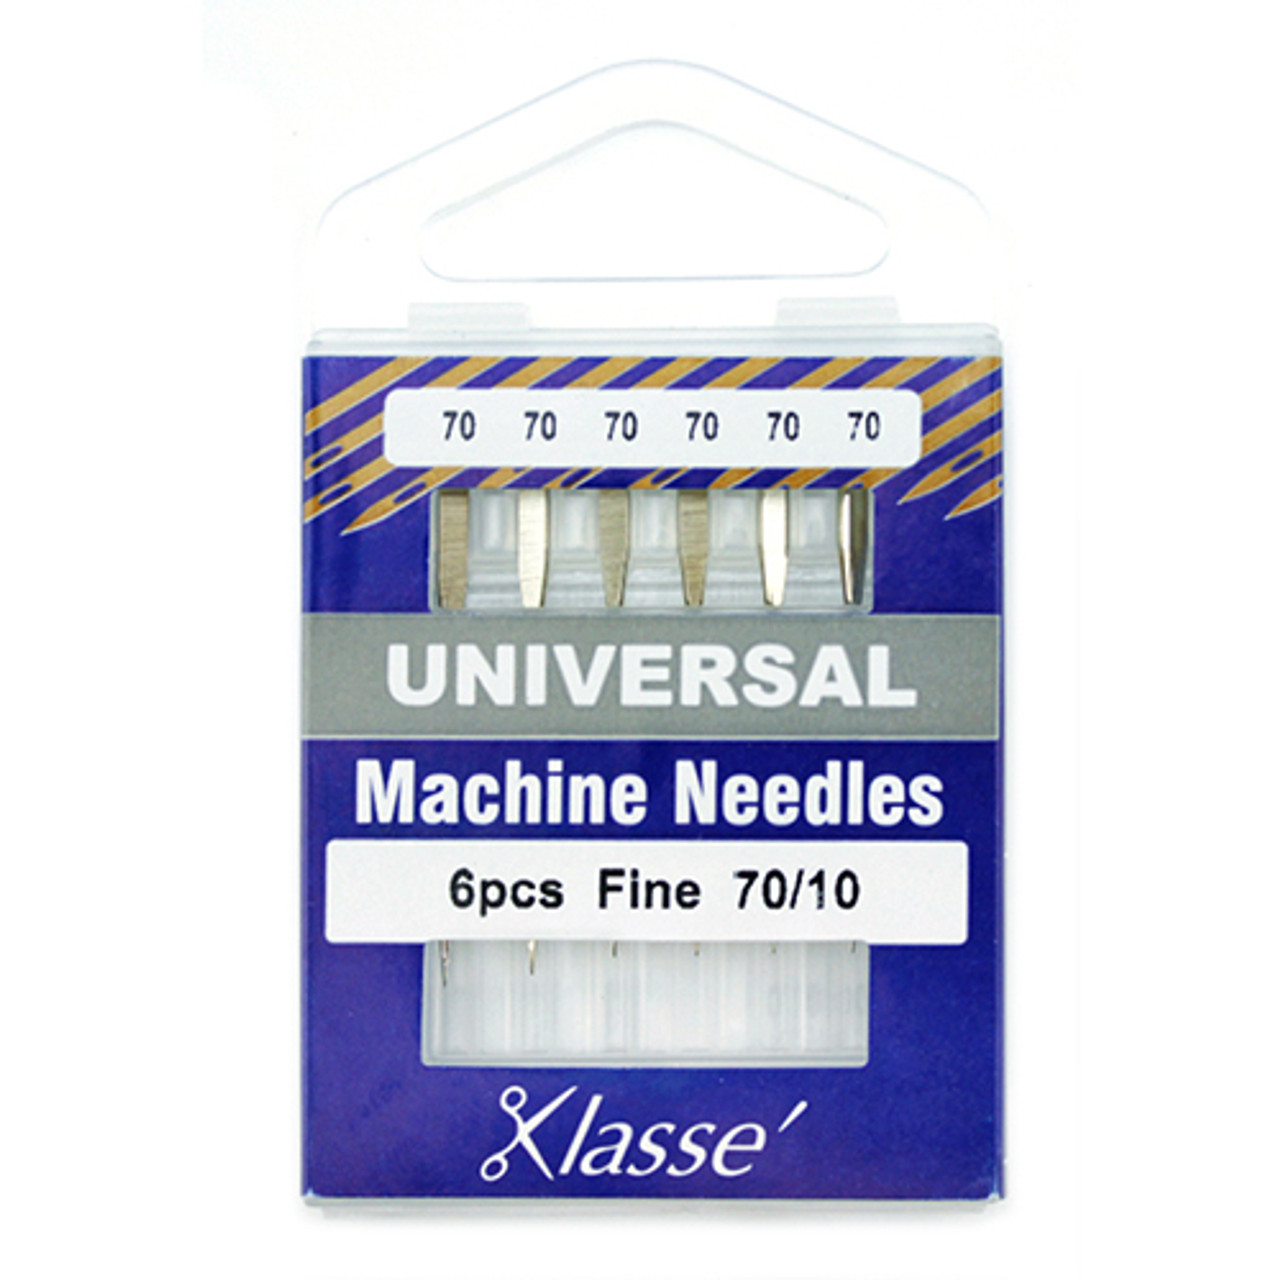 Klasse Machine Needles; Universal - 6 needles/pack